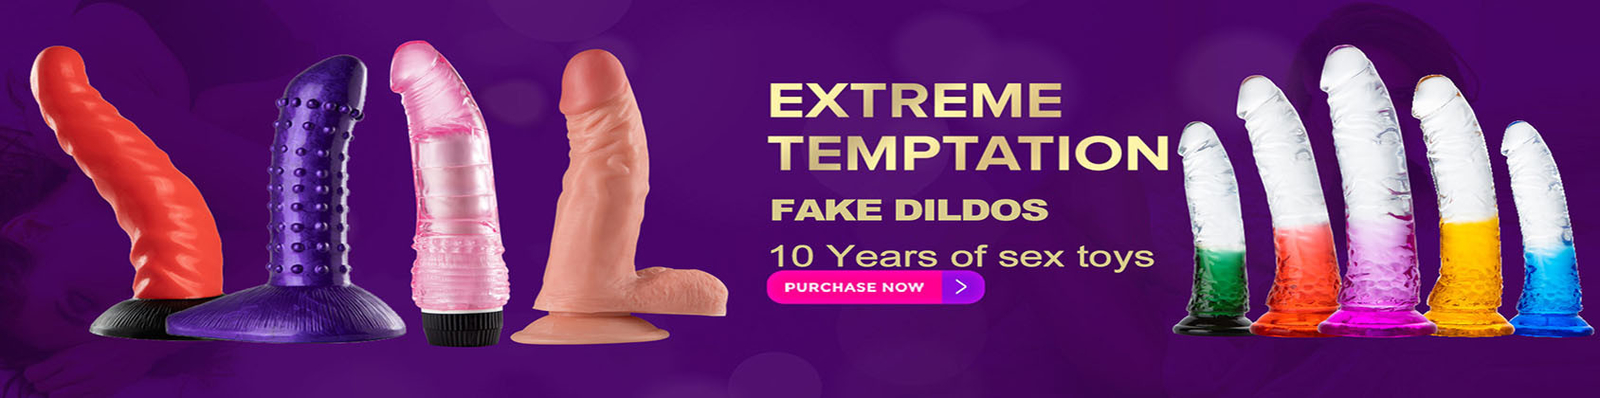 Dildo Sex Toy